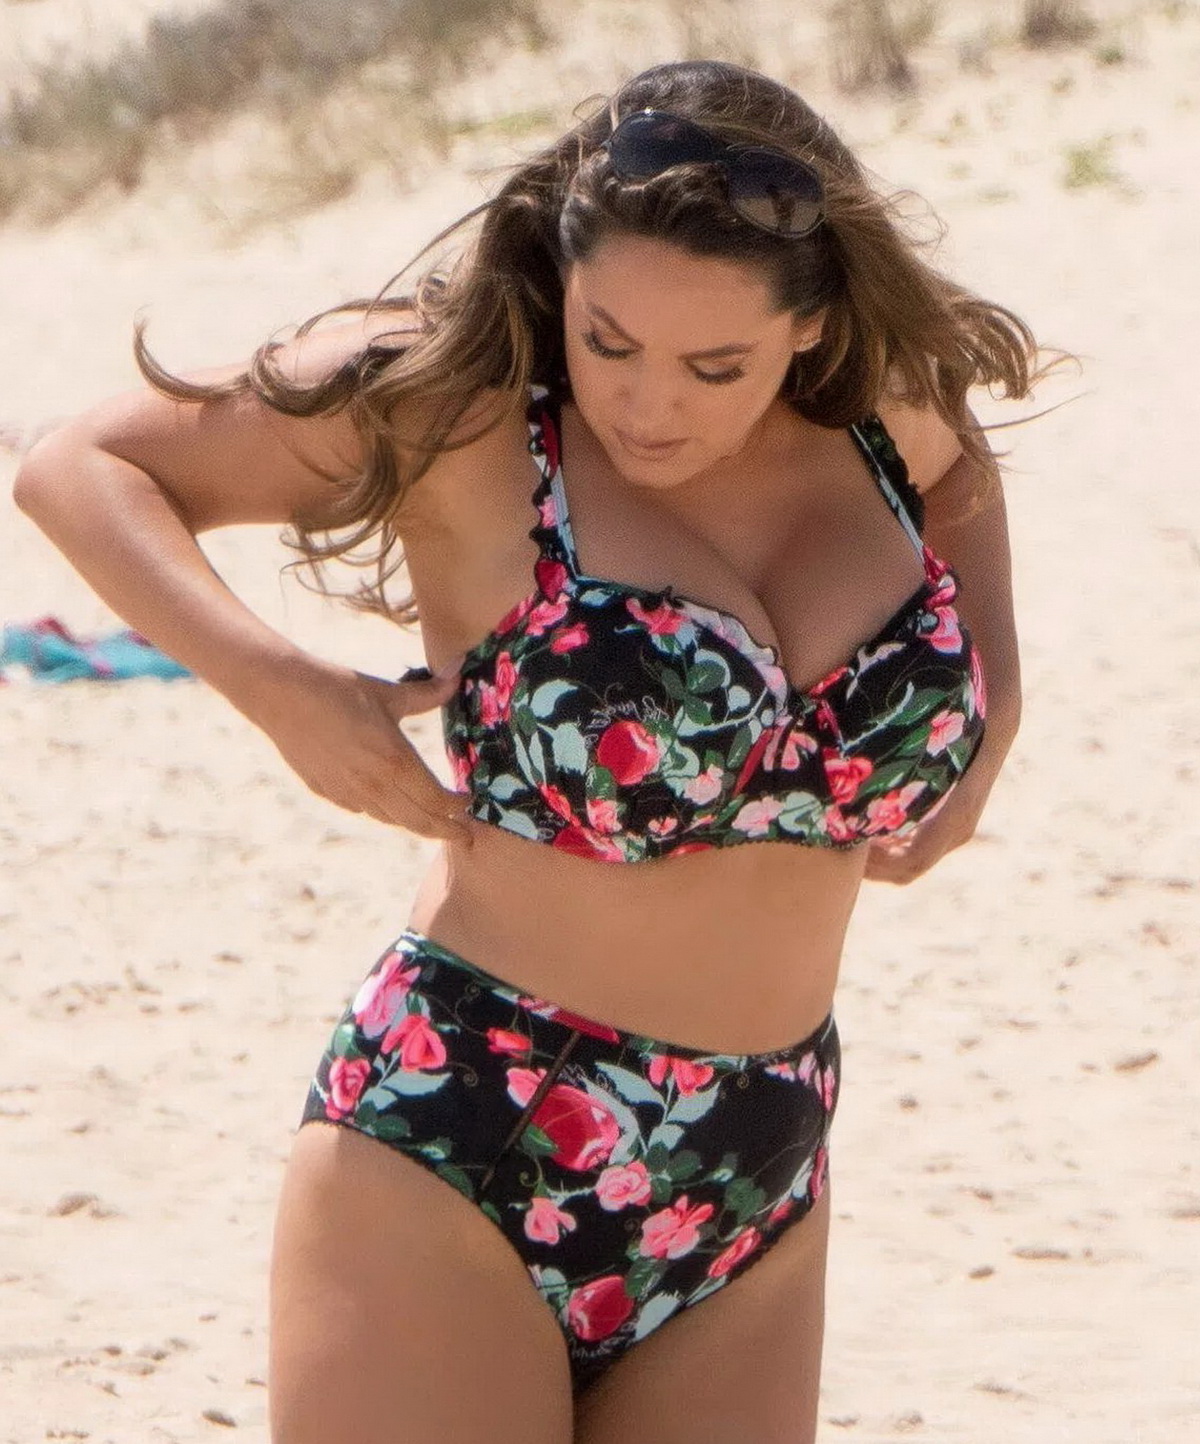 Kelly Brook big boobs and ass in bikini on the beach candids UHQ (5).jpg